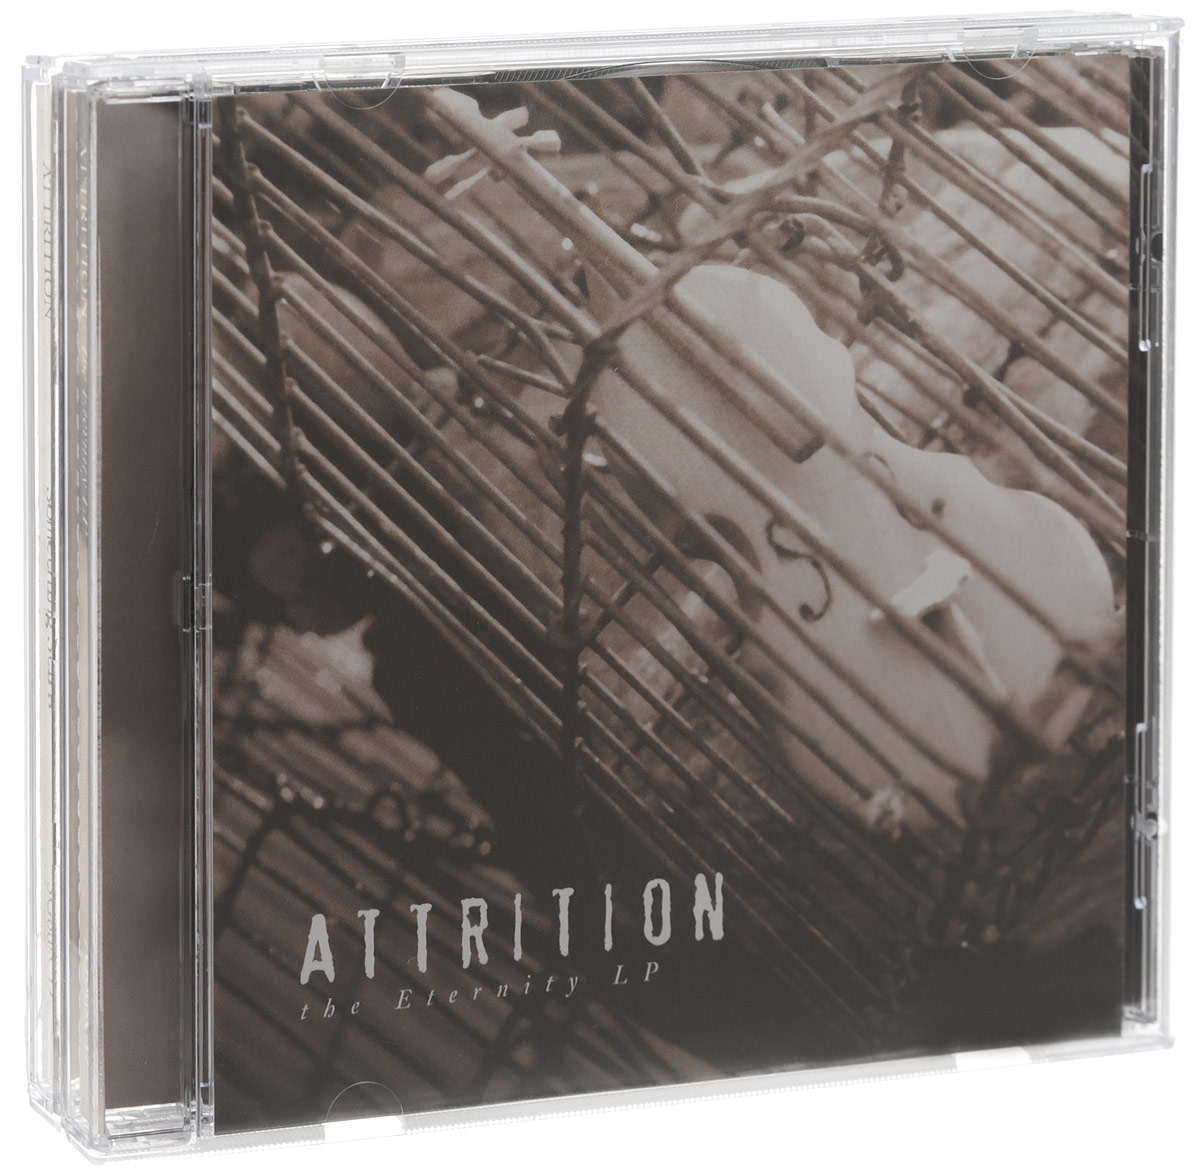 Attrition. Something Stirs / Eternity LP (2 CD)